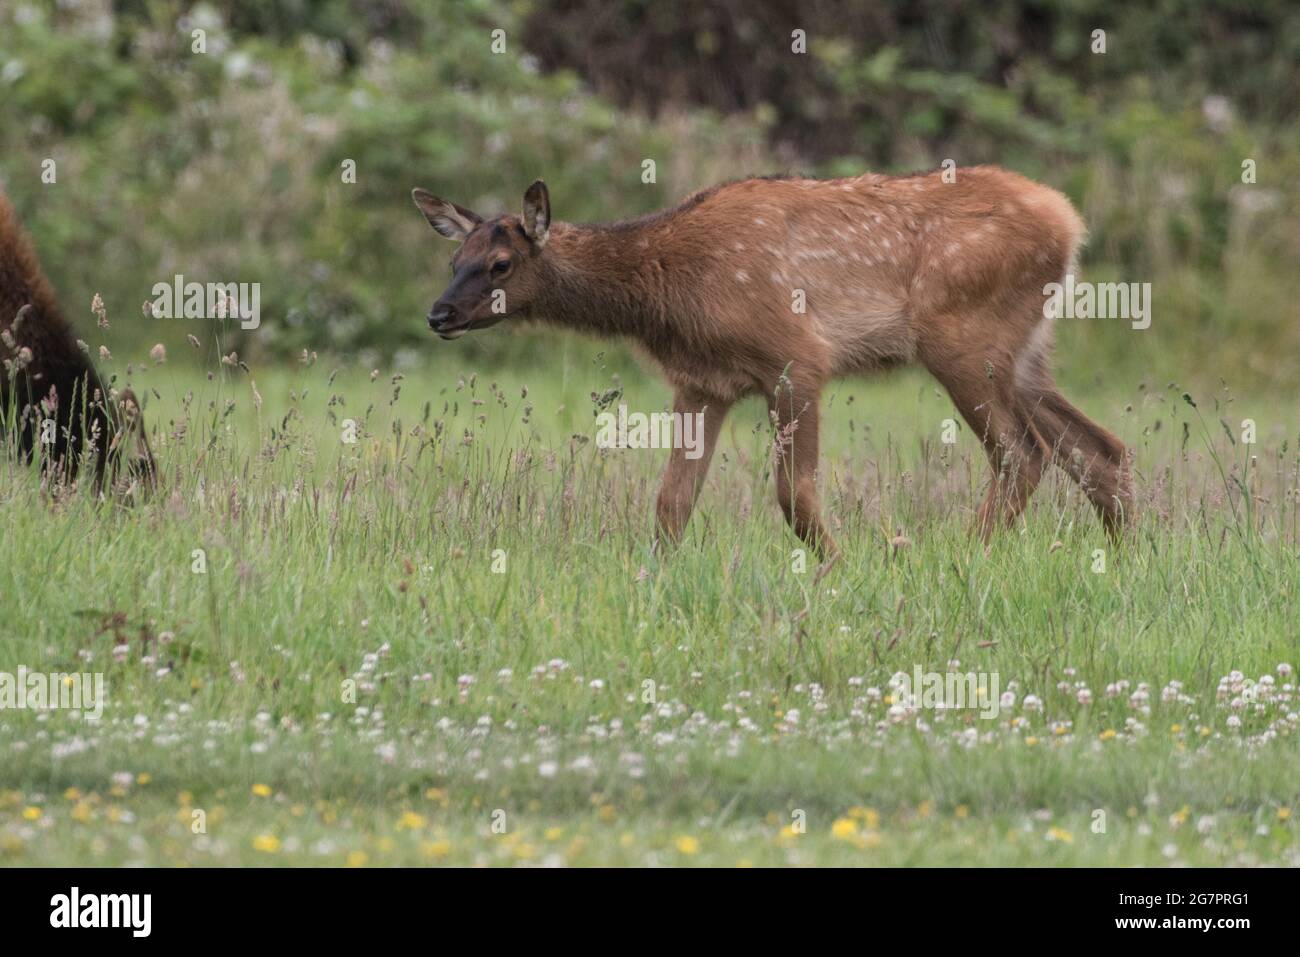 A roosevelt elk calf (Cervus canadensis roosevelti) in a grassland in Northern California. Stock Photo